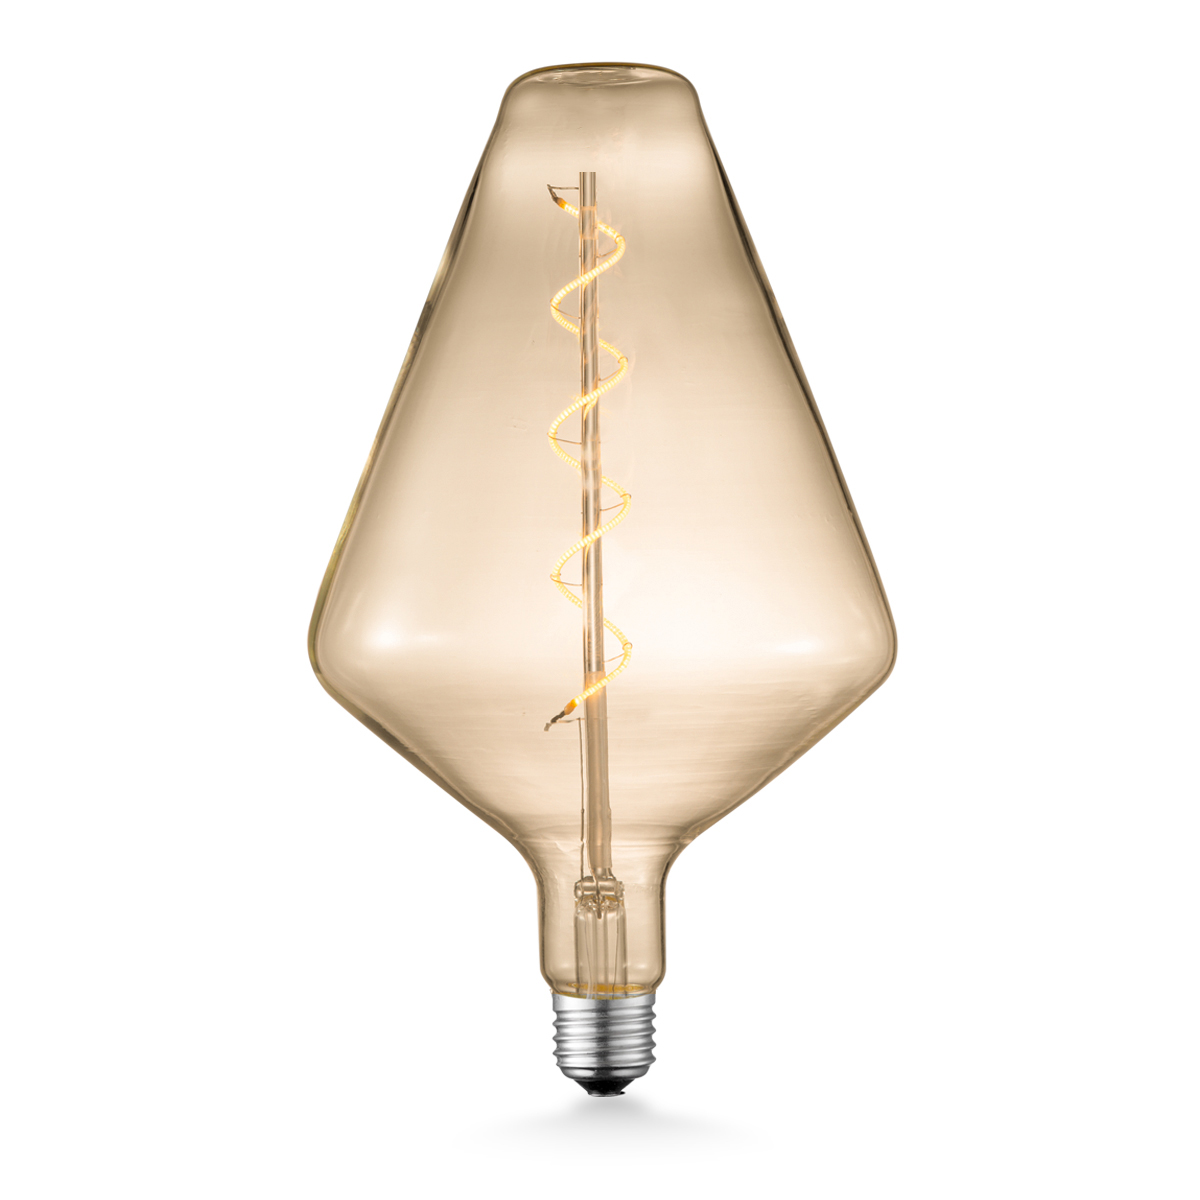 Tangla lighting - TLB-8065-04AM - LED Light Bulb Single Spiral filament - special 4W amber - medium sharp - dimmable - E27